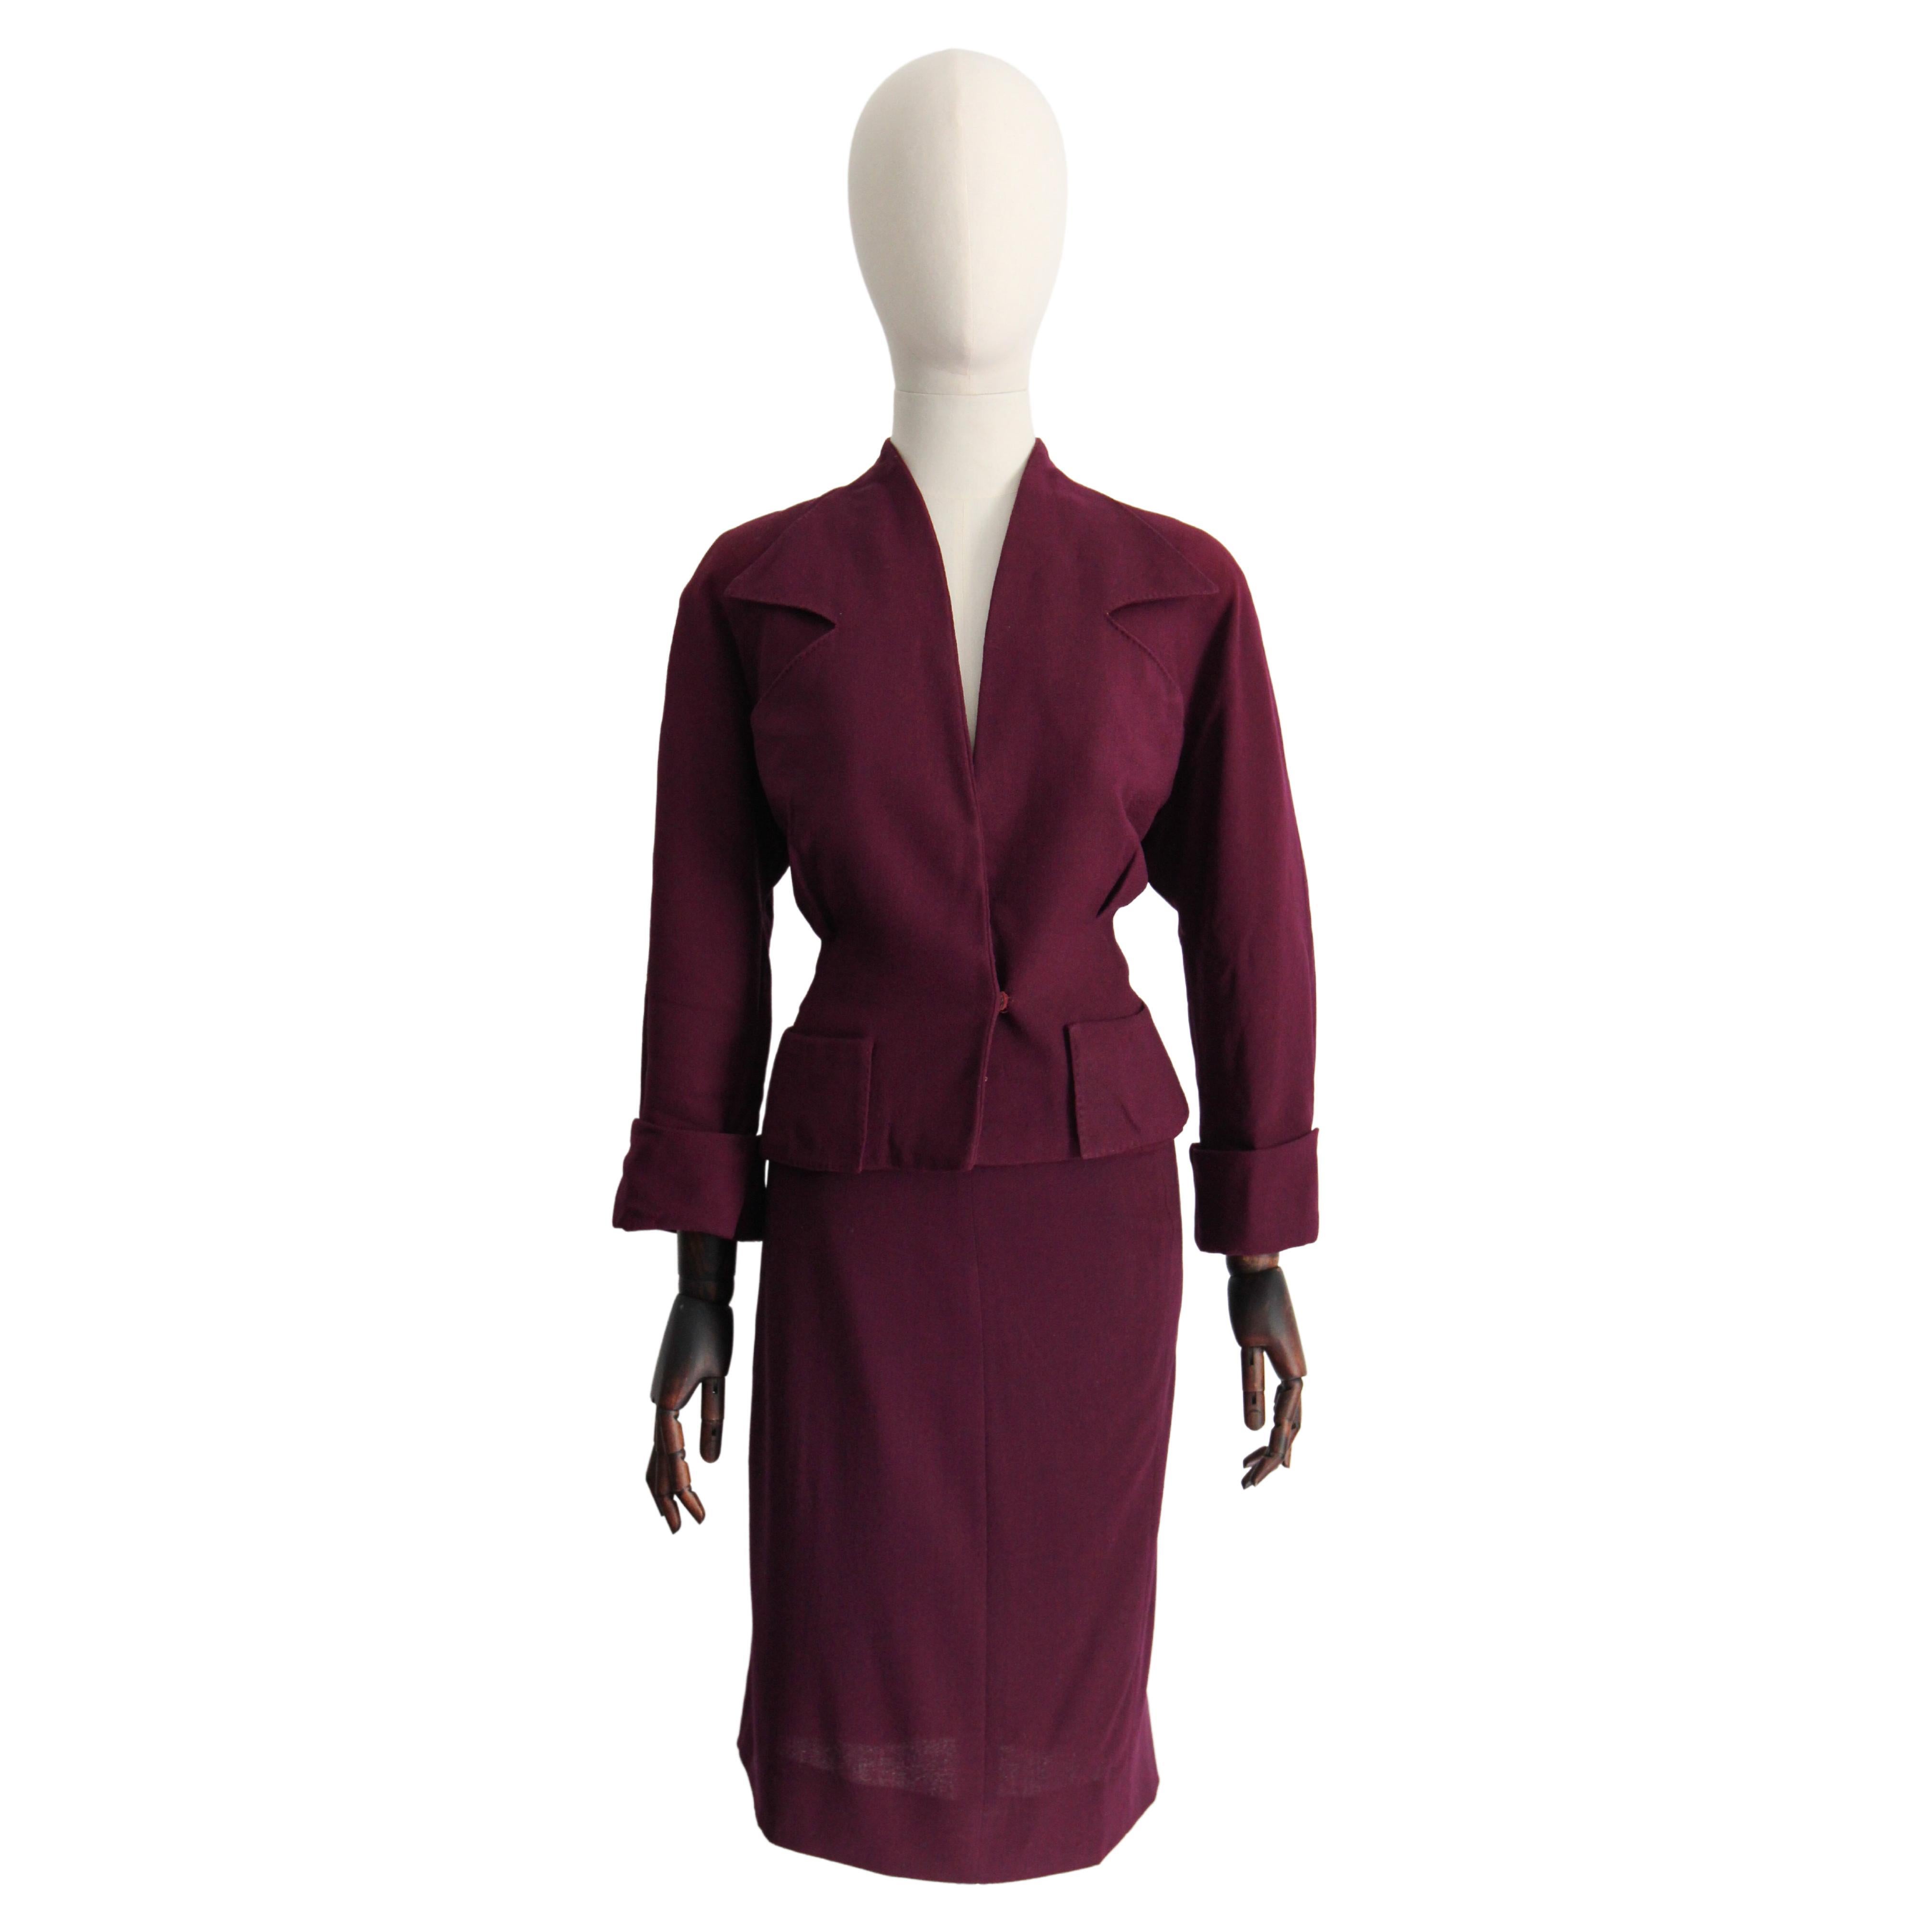 Vintage 1940's plum wool crepe skirt suit tailored burgundy suit UK 8-10 US 4-6 For Sale